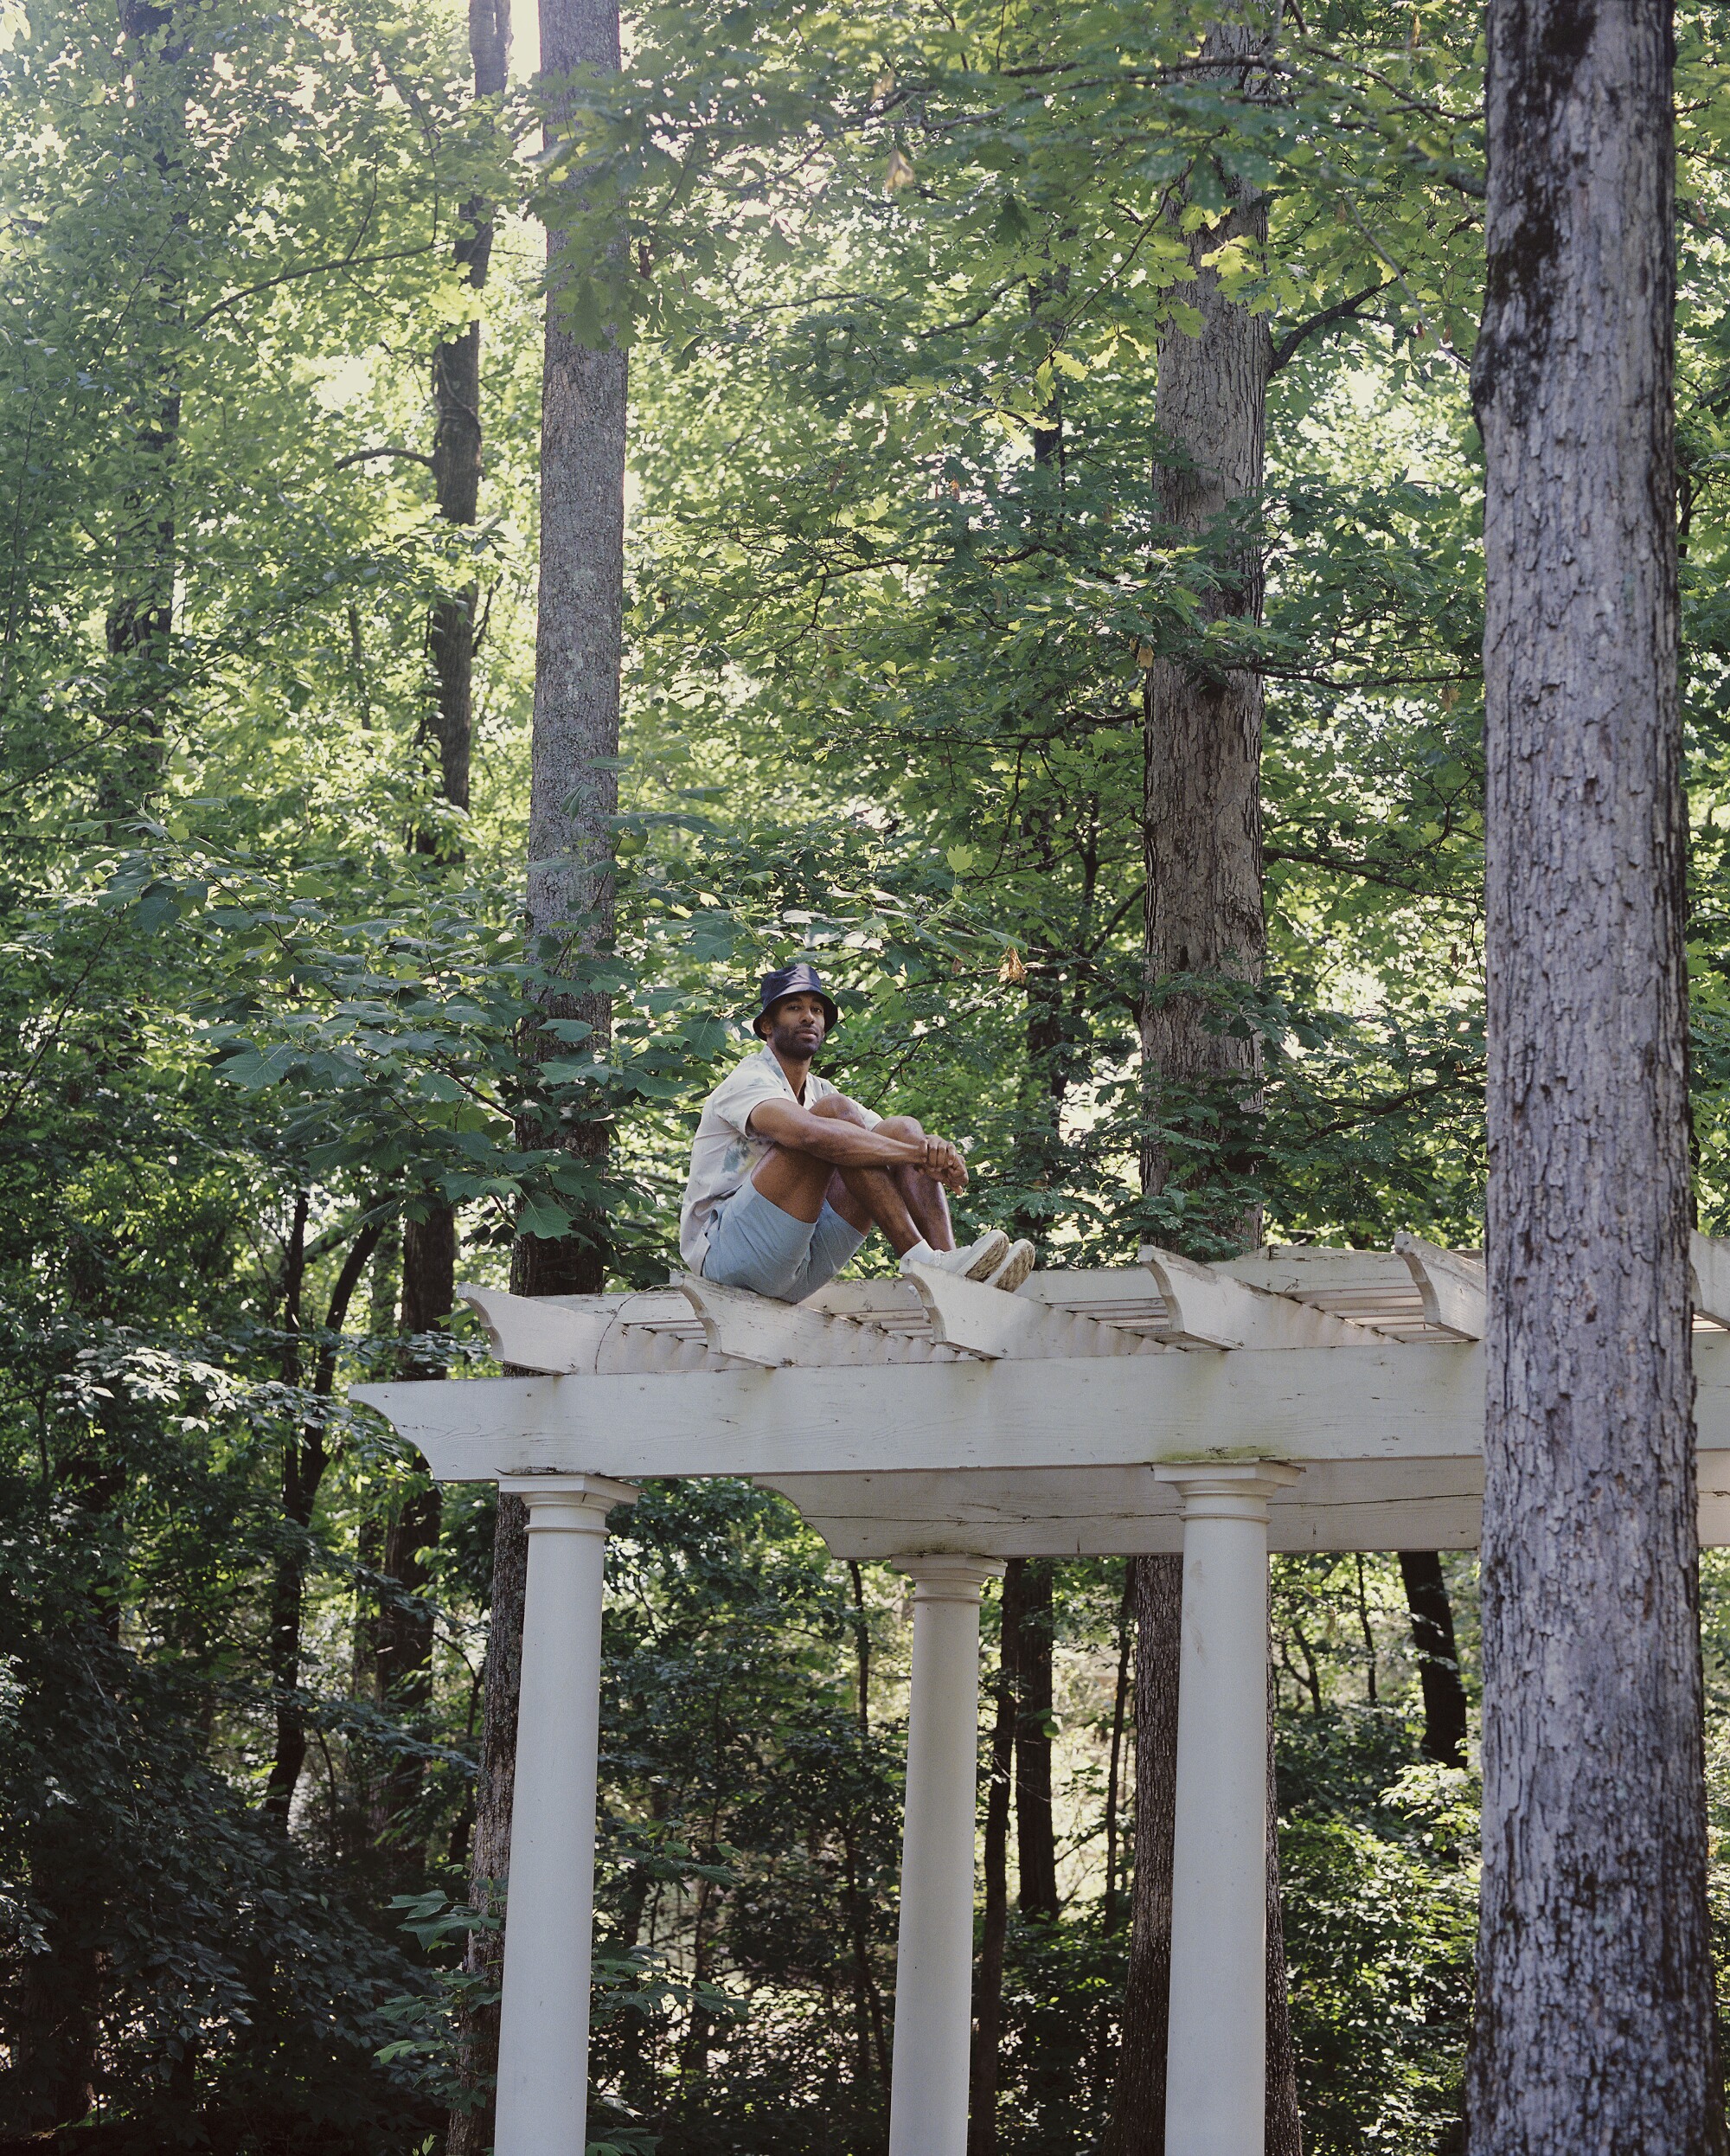 A man sits on a wooden deck.